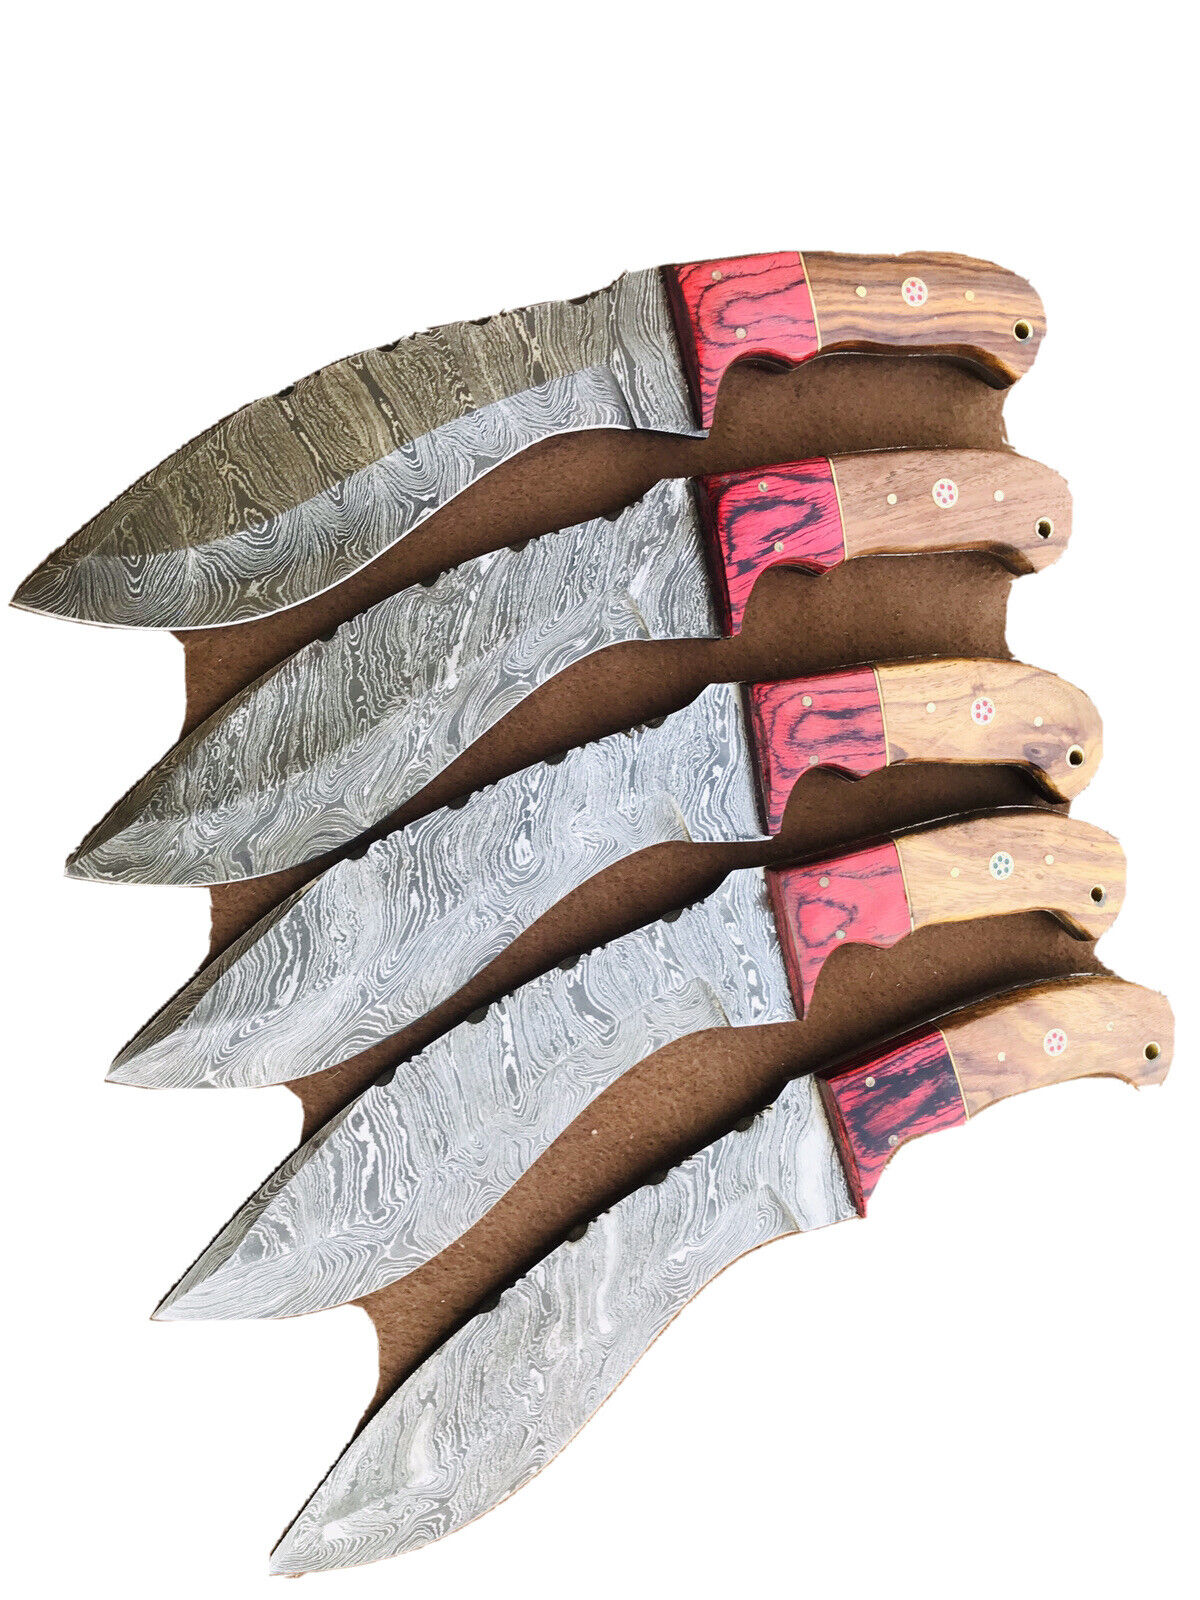 CUSTOM HAND MADE DAMASCUS STEEL KUKRI HAND MADE KNIVES (lot Of 5).new